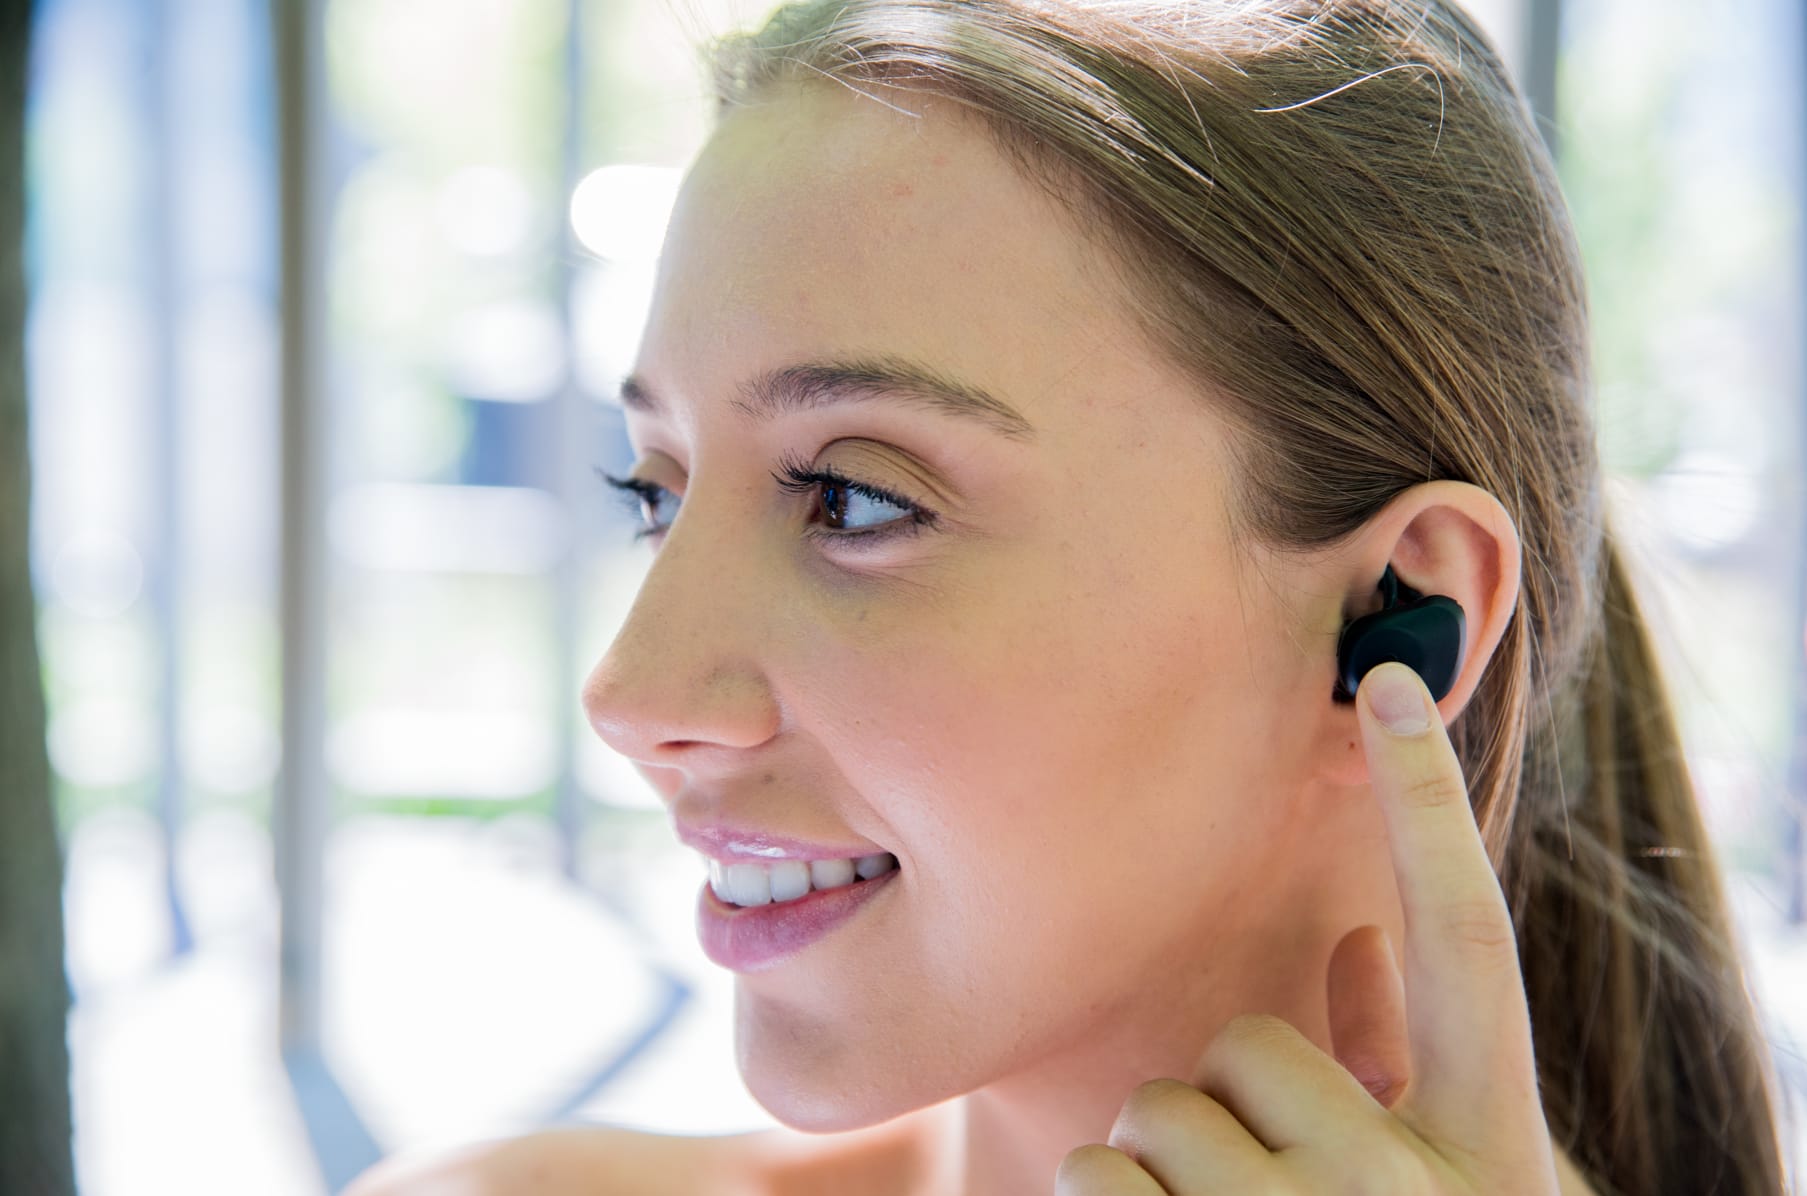 Loop Experience Plus True Wireless Bluetooth Earbuds - Midnight Black -  Micro Center